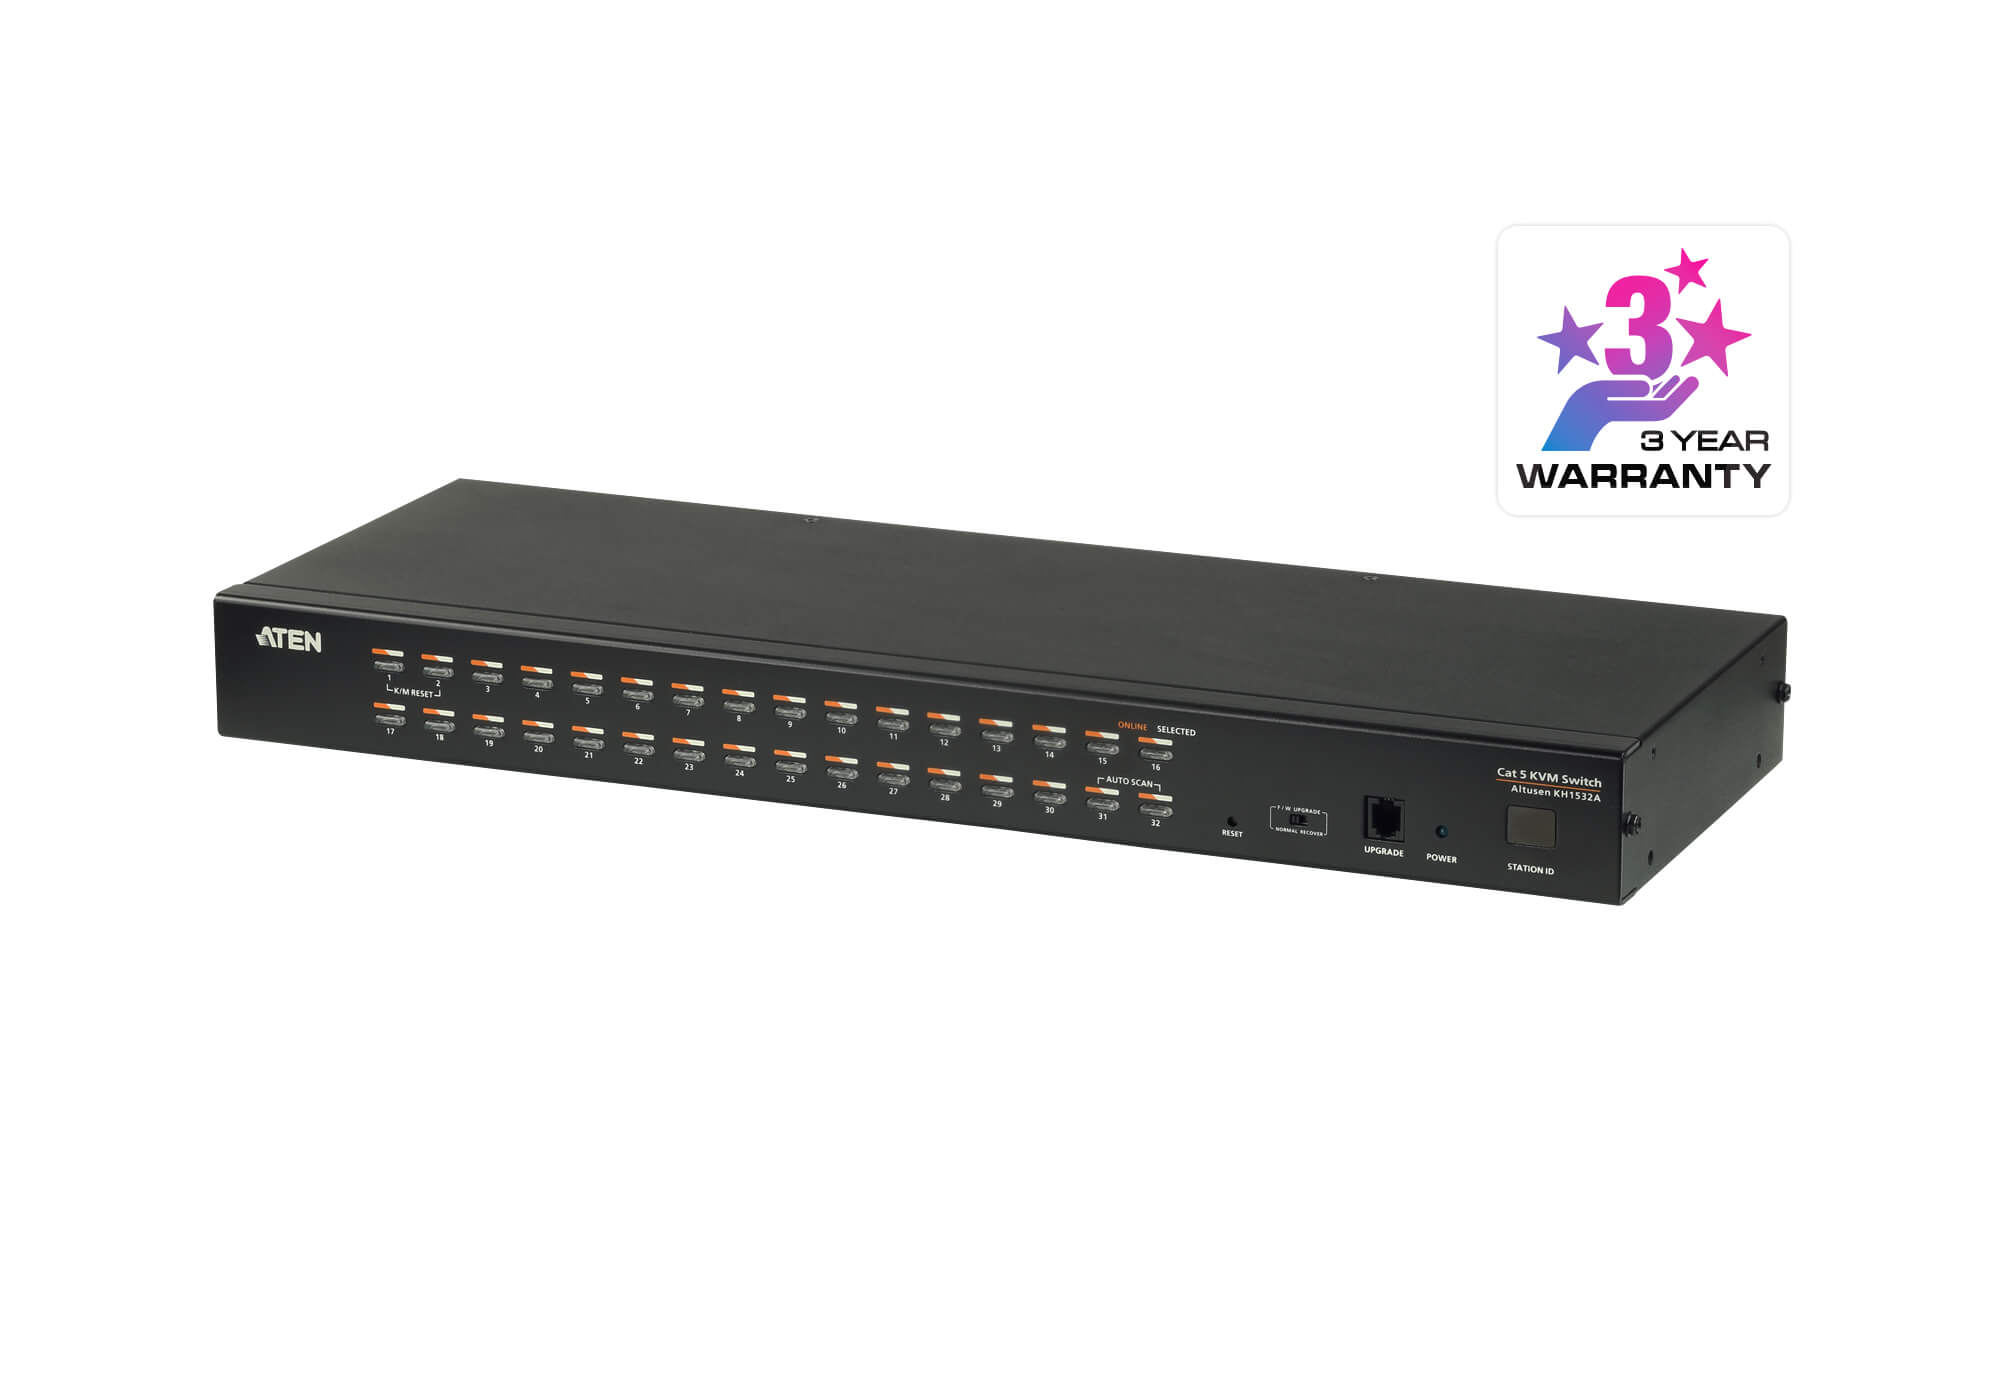 KH1532A 32-Port Multi-Interface (DisplayPort, HDMI, DVI, VGA) Cat 5 KVM Switch